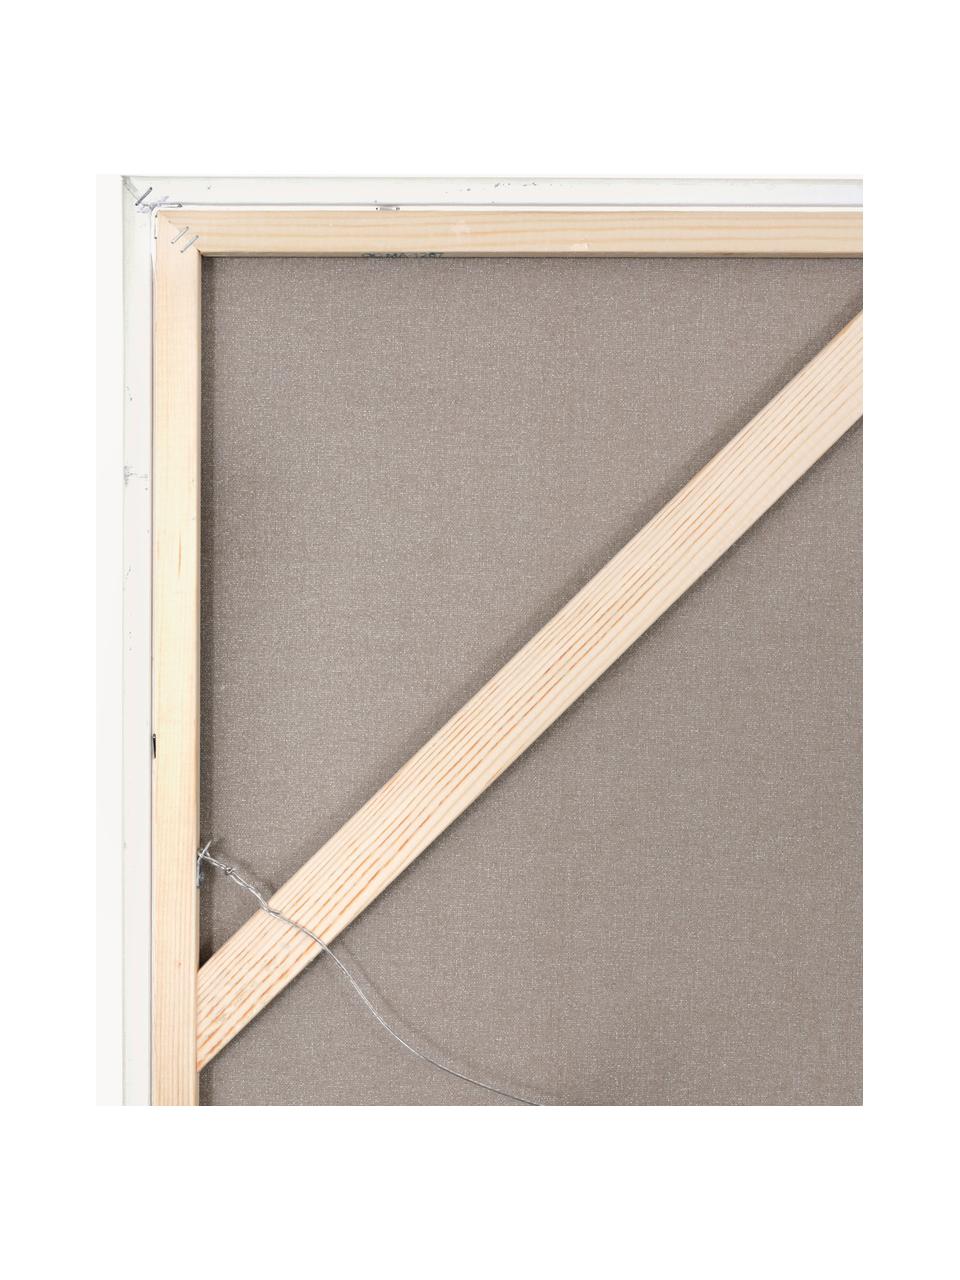 Handgemaltes Leinwandbild Scenario mit Holzrahmen, Rahmen: Eichenholz, Design 1, B 92 x H 120 cm